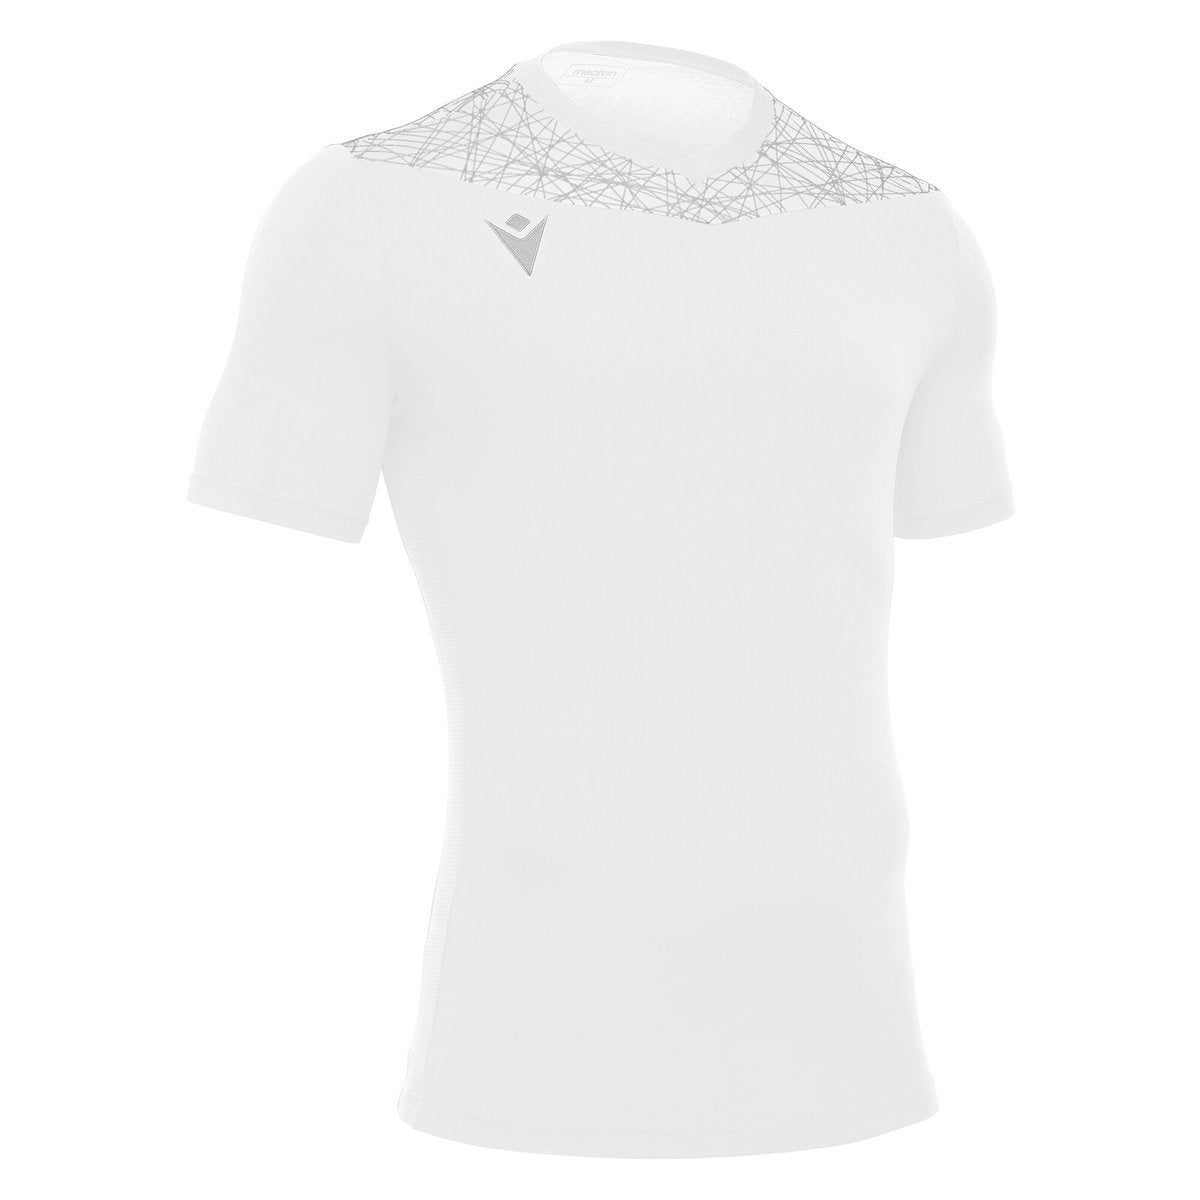 Macron Nash Shirt - White/Silver